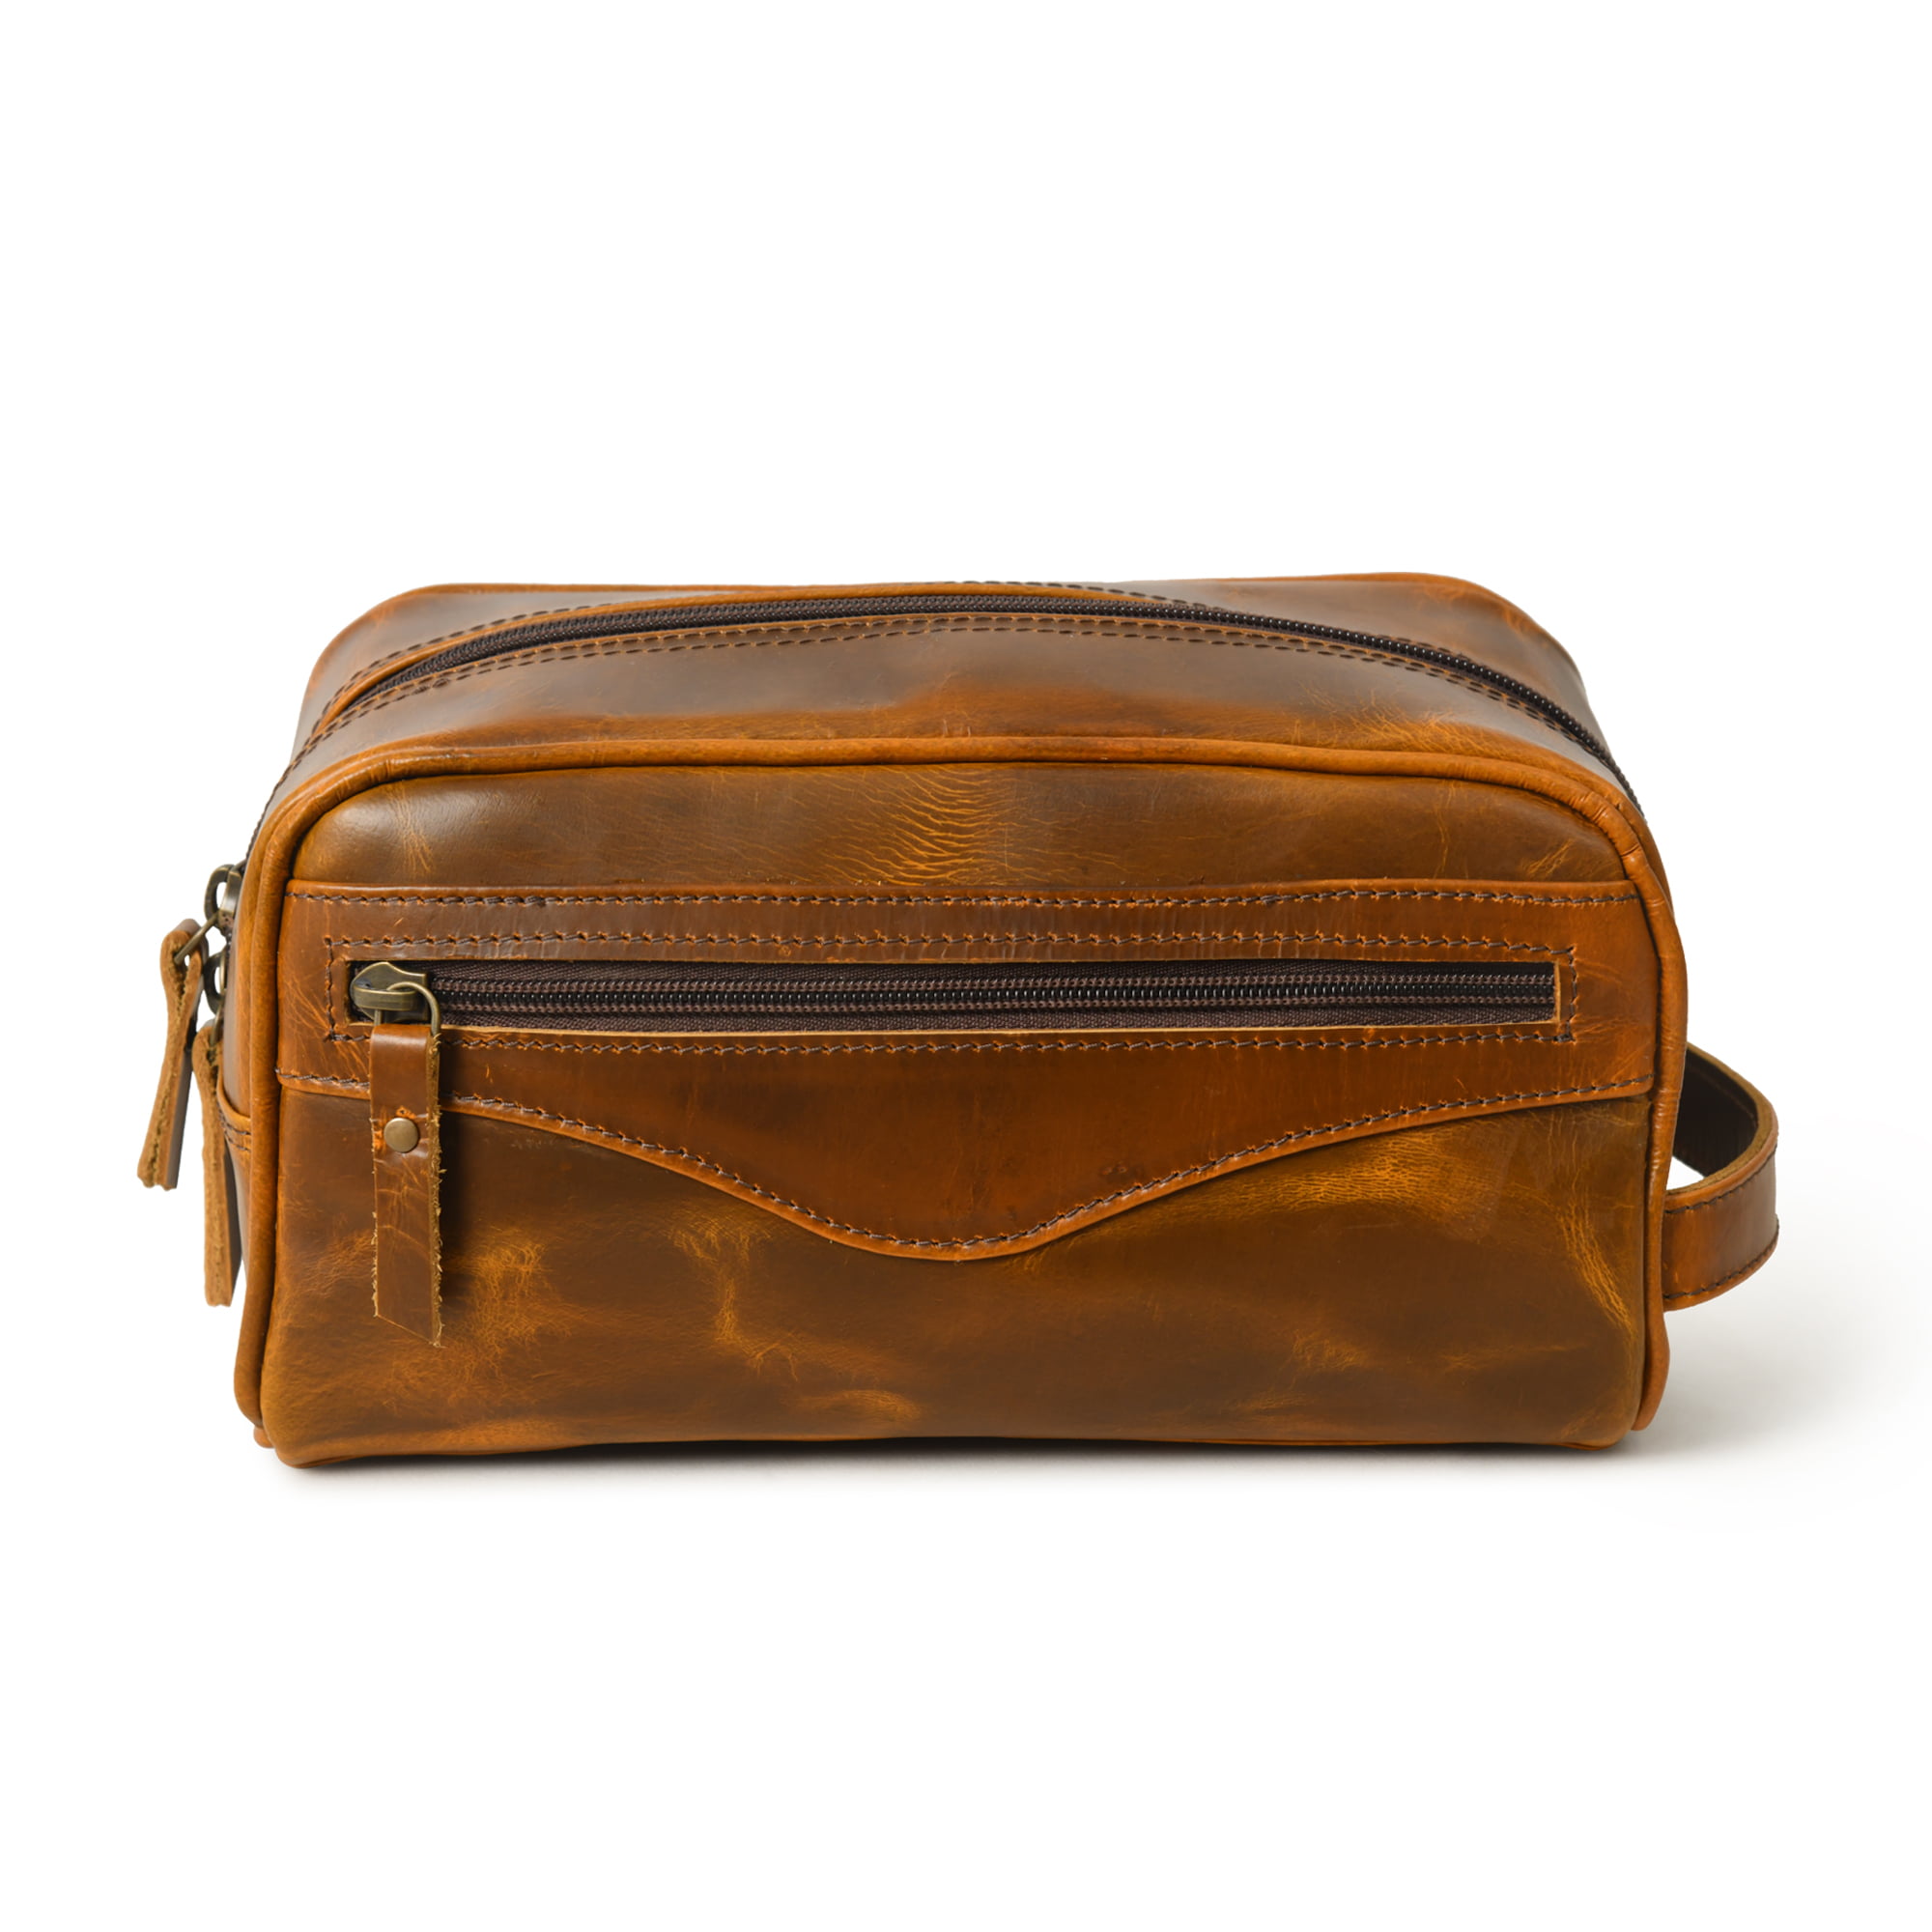 john lewis leather toiletry bag brown paisley print lining rare mens Travel  Bag